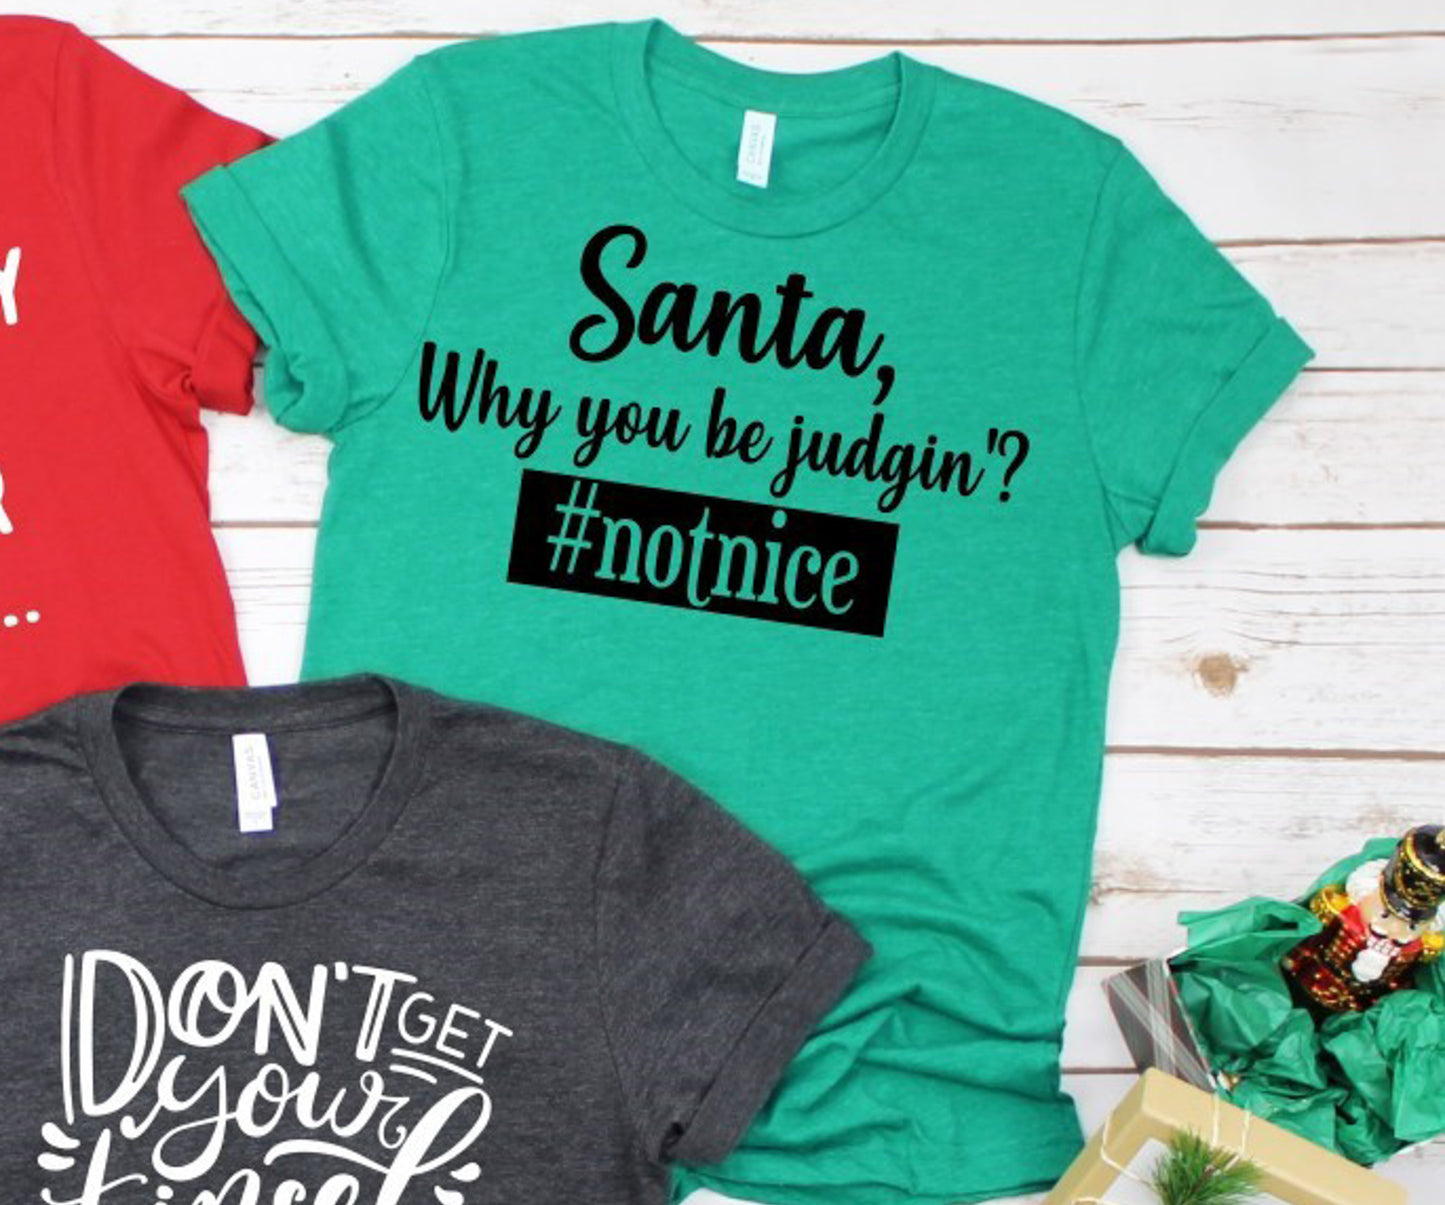 Santa Why You Be Judgin' #notnice Tee